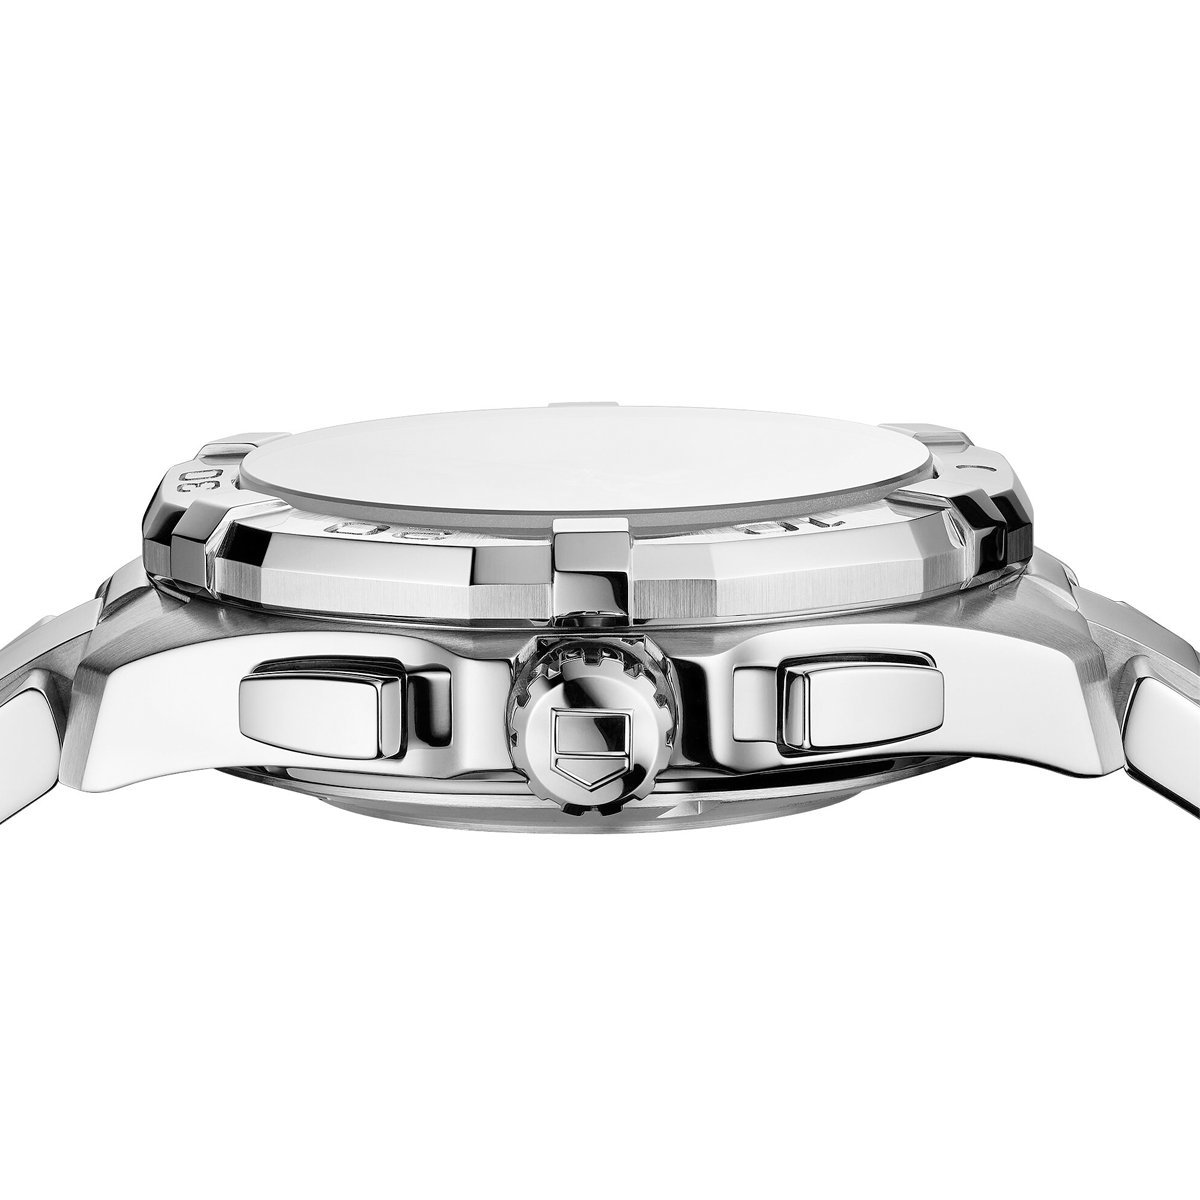 Aquaracer 43mm Steel Automatic Watch